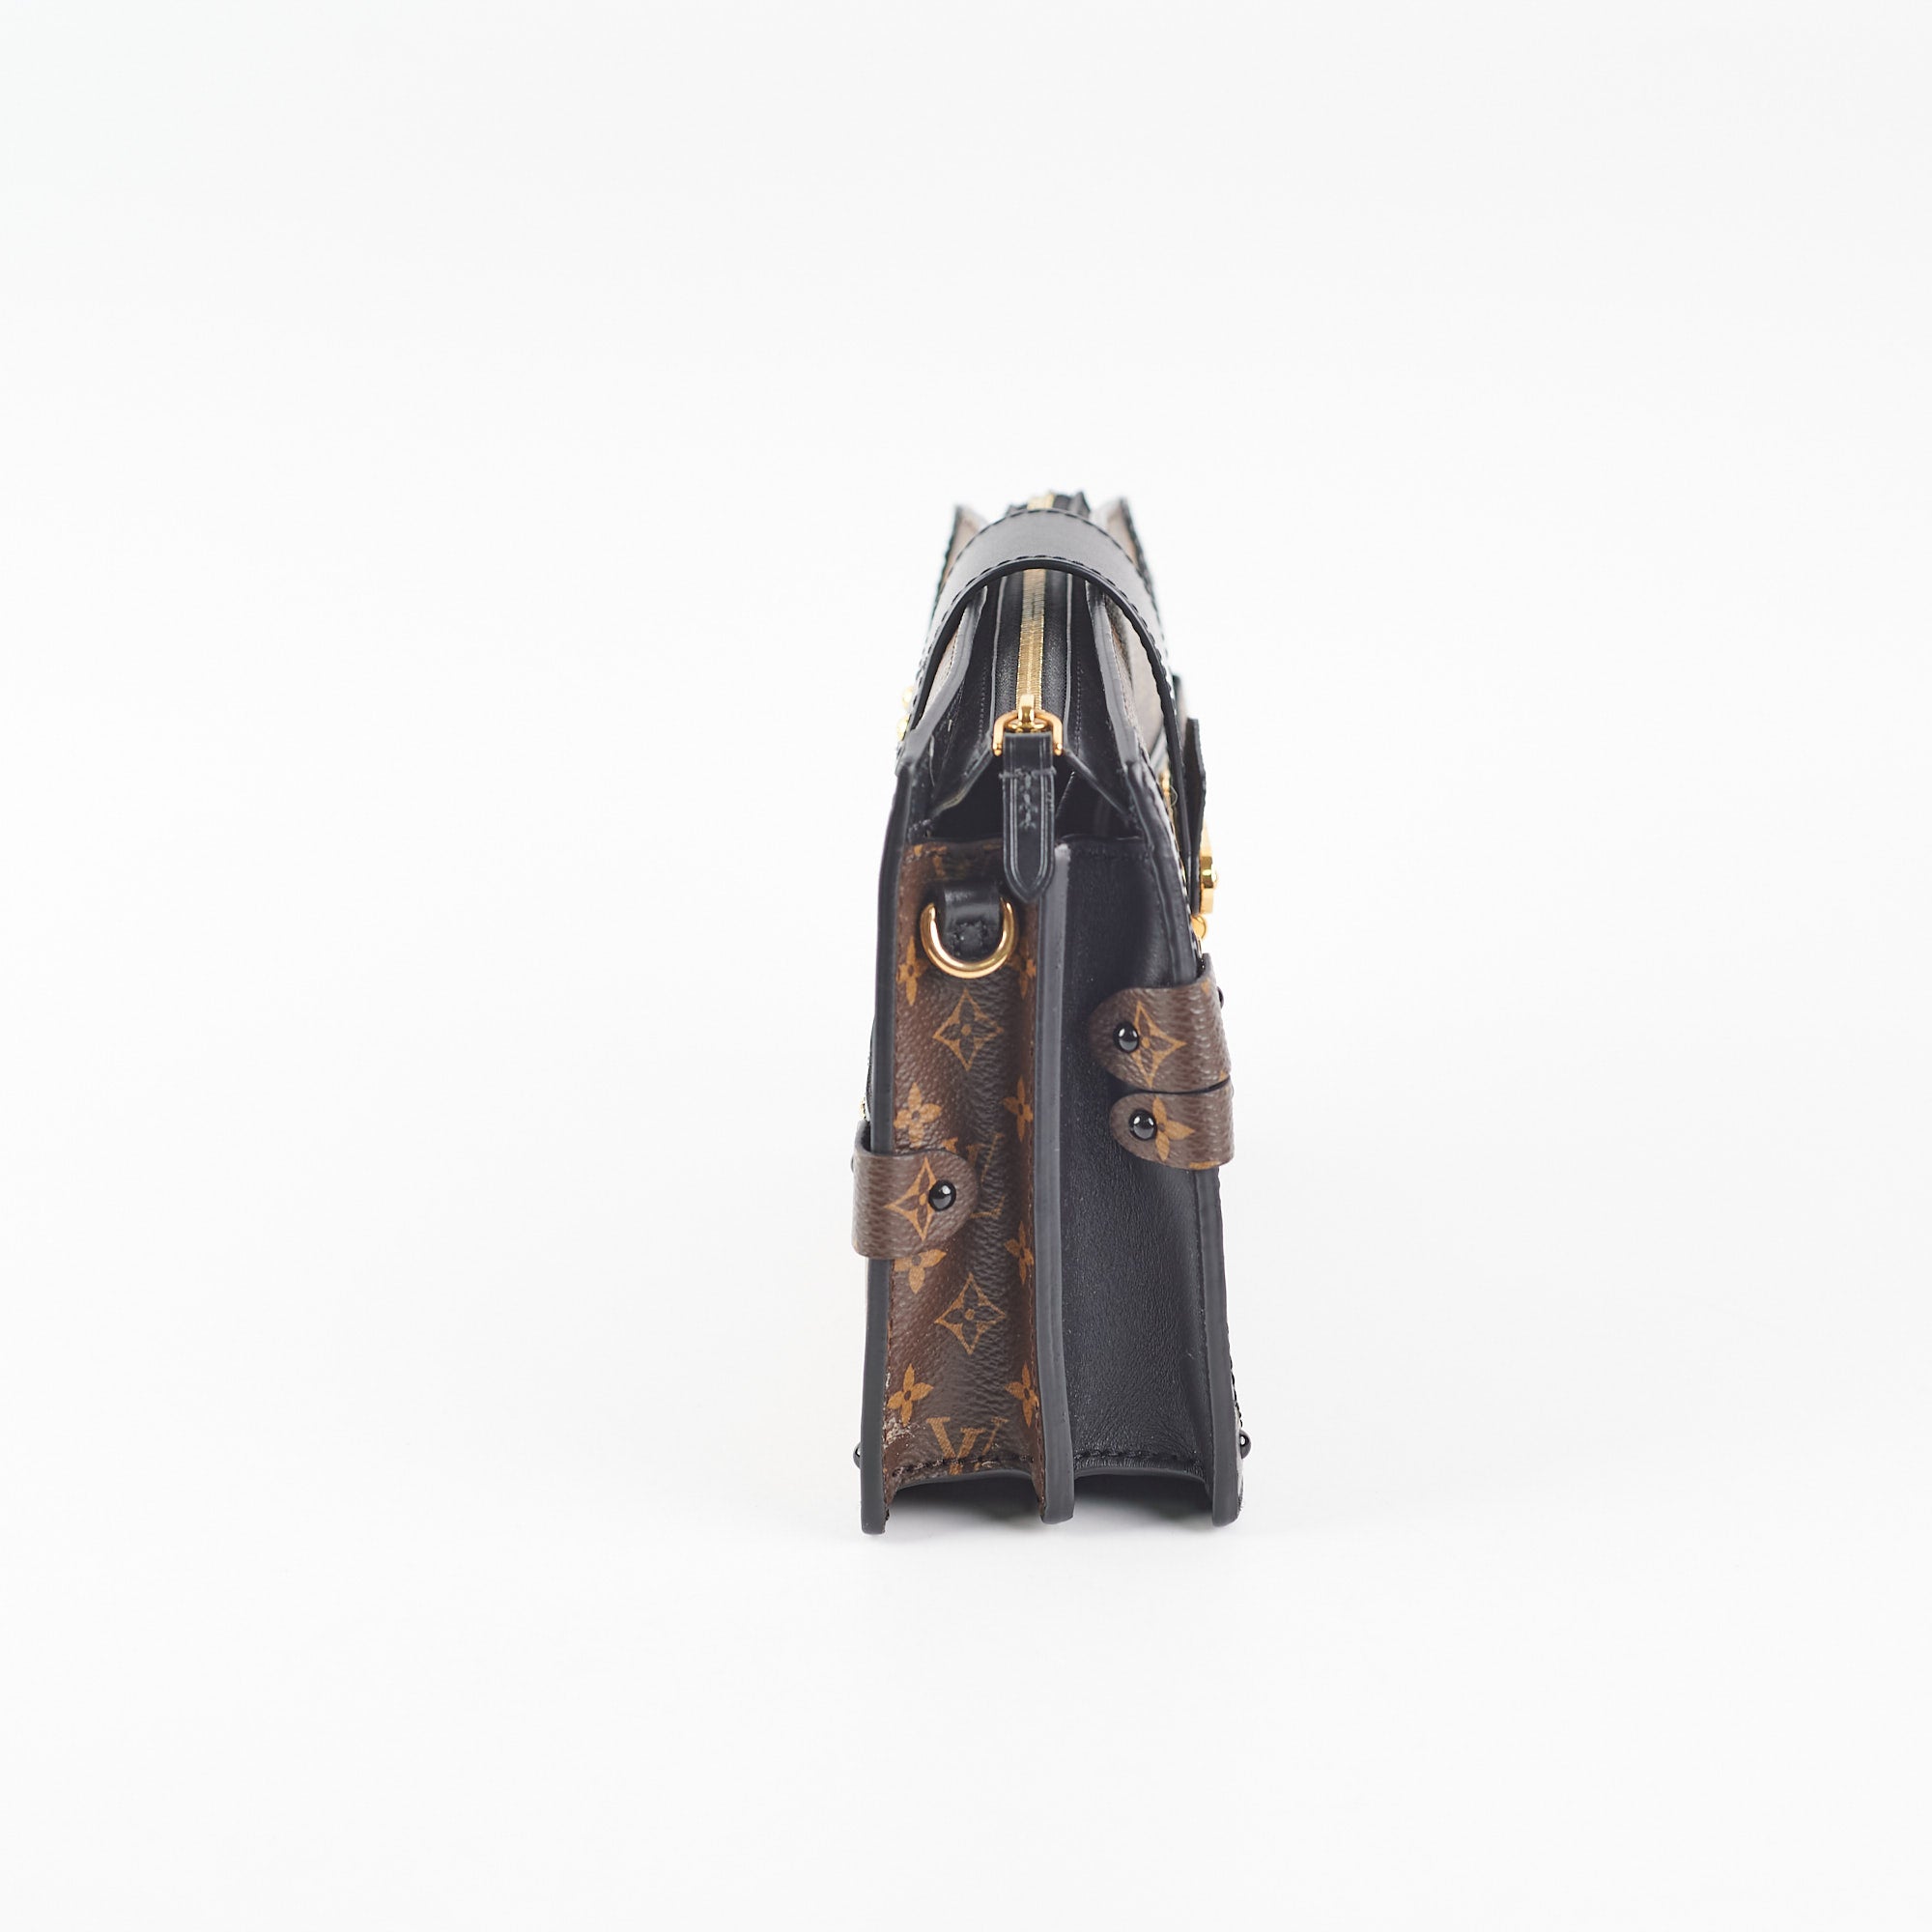 LOUIS VUITTON Camera Box Shoulder Bag Monogram Reverse M82465 #U233